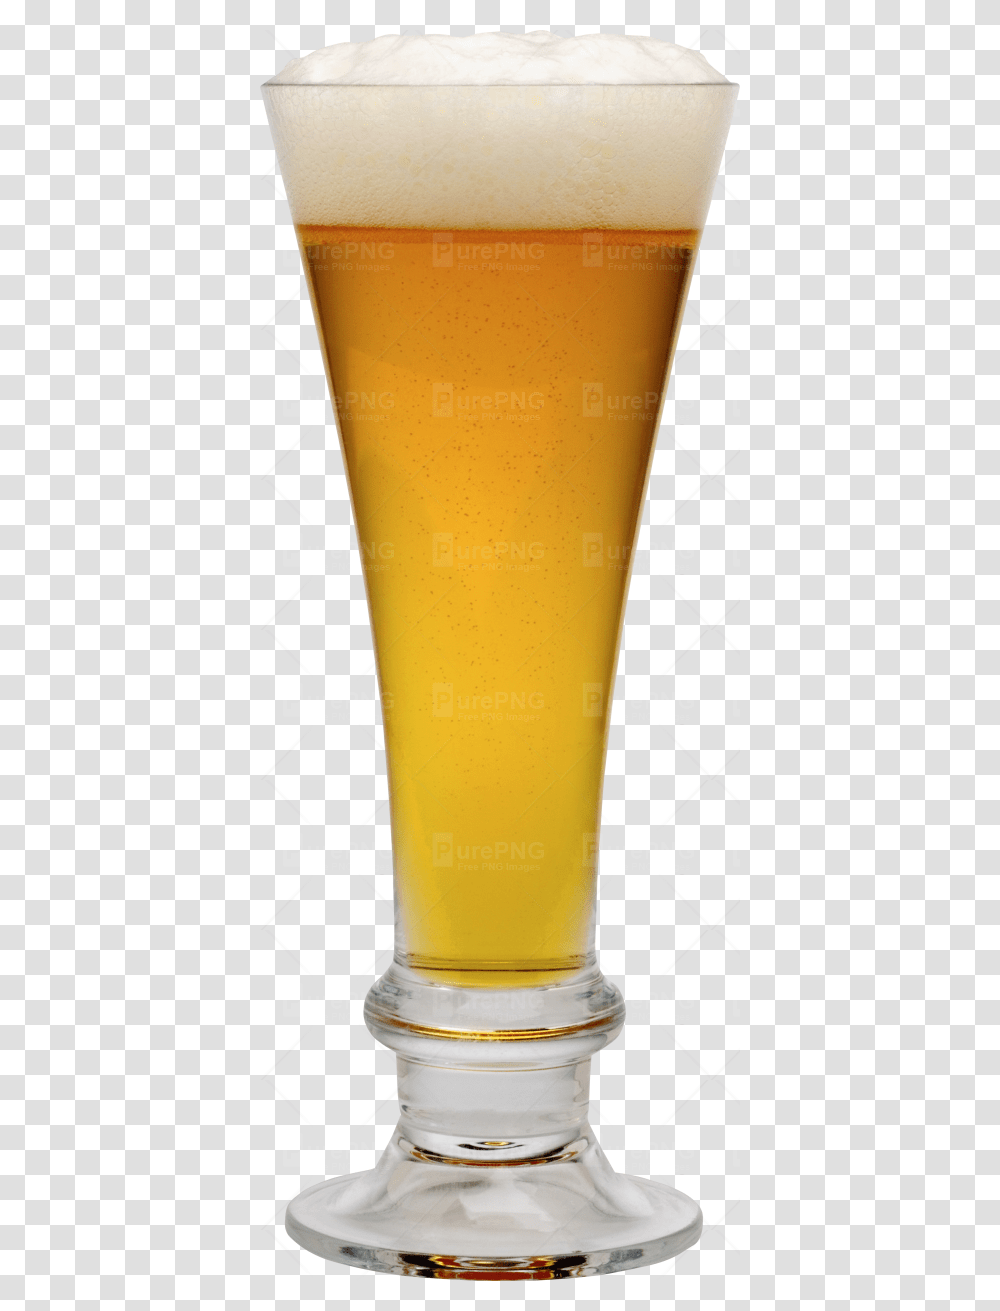 Glass Of Beer Image Glass Of Beer Background, Beer Glass, Alcohol, Beverage, Drink Transparent Png